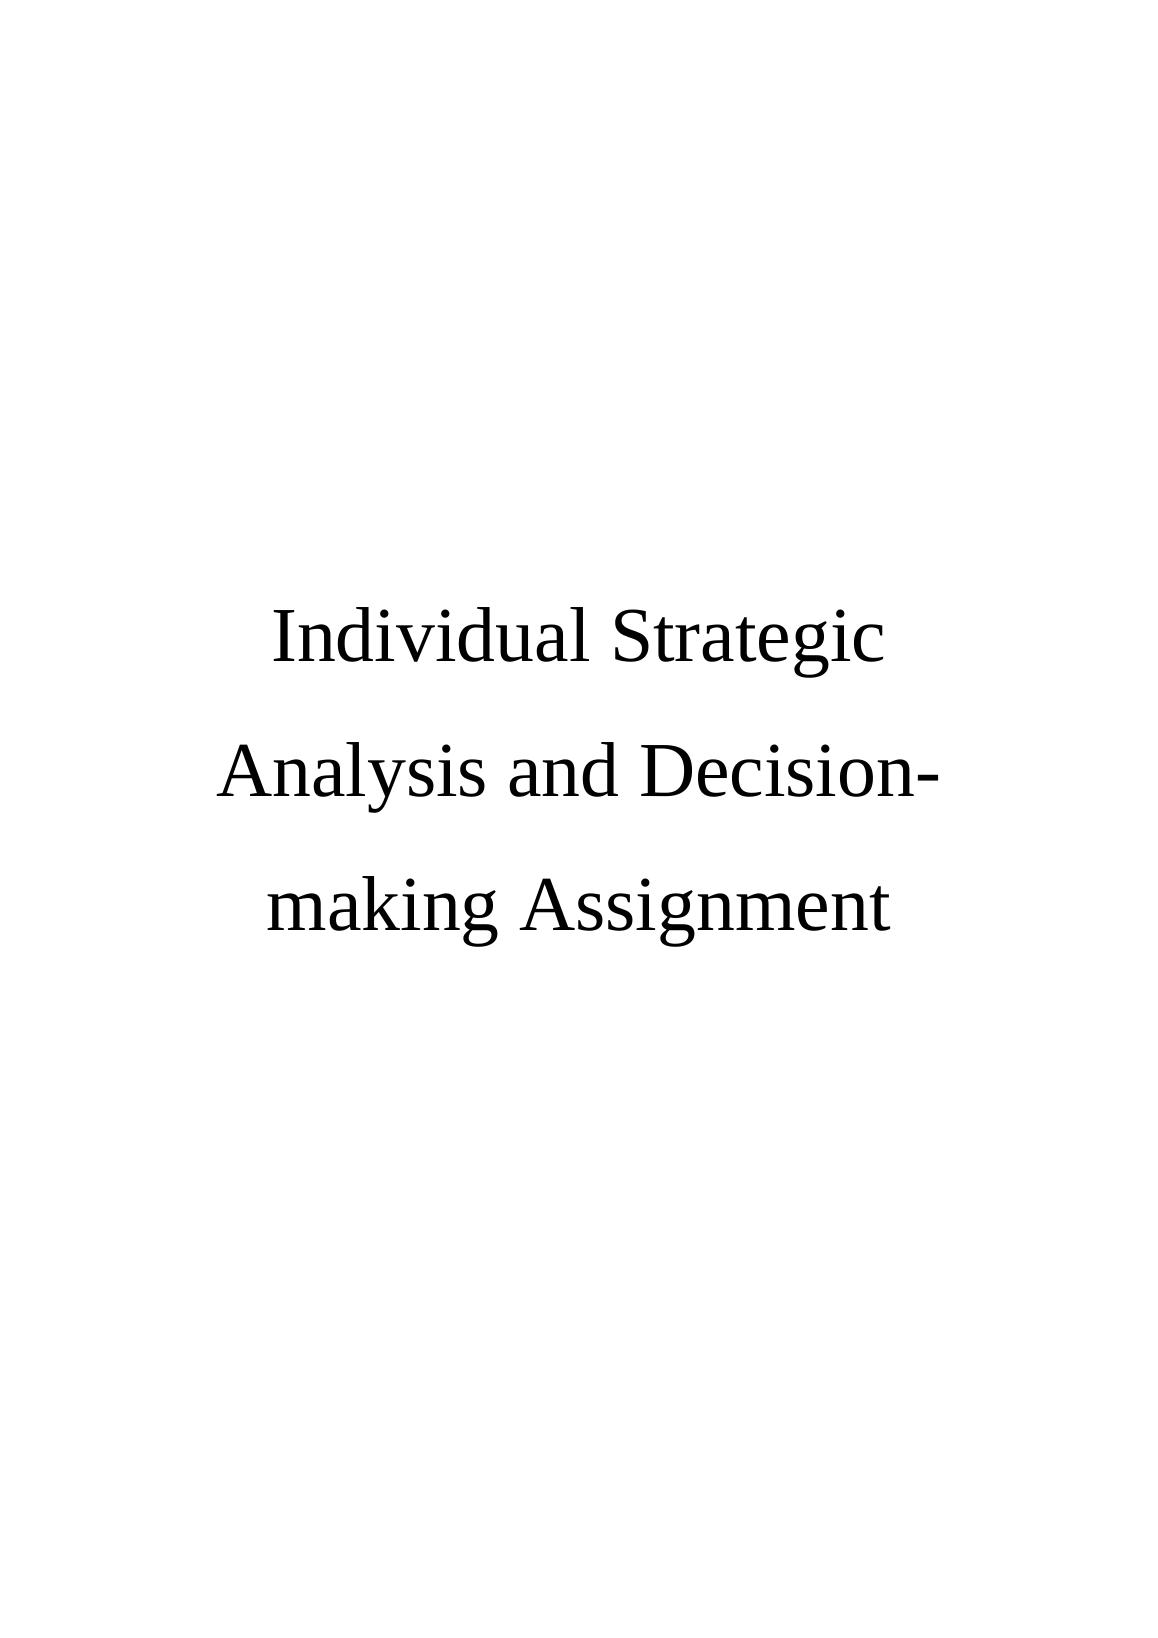 Strategic Analysis of CRH Plc_1